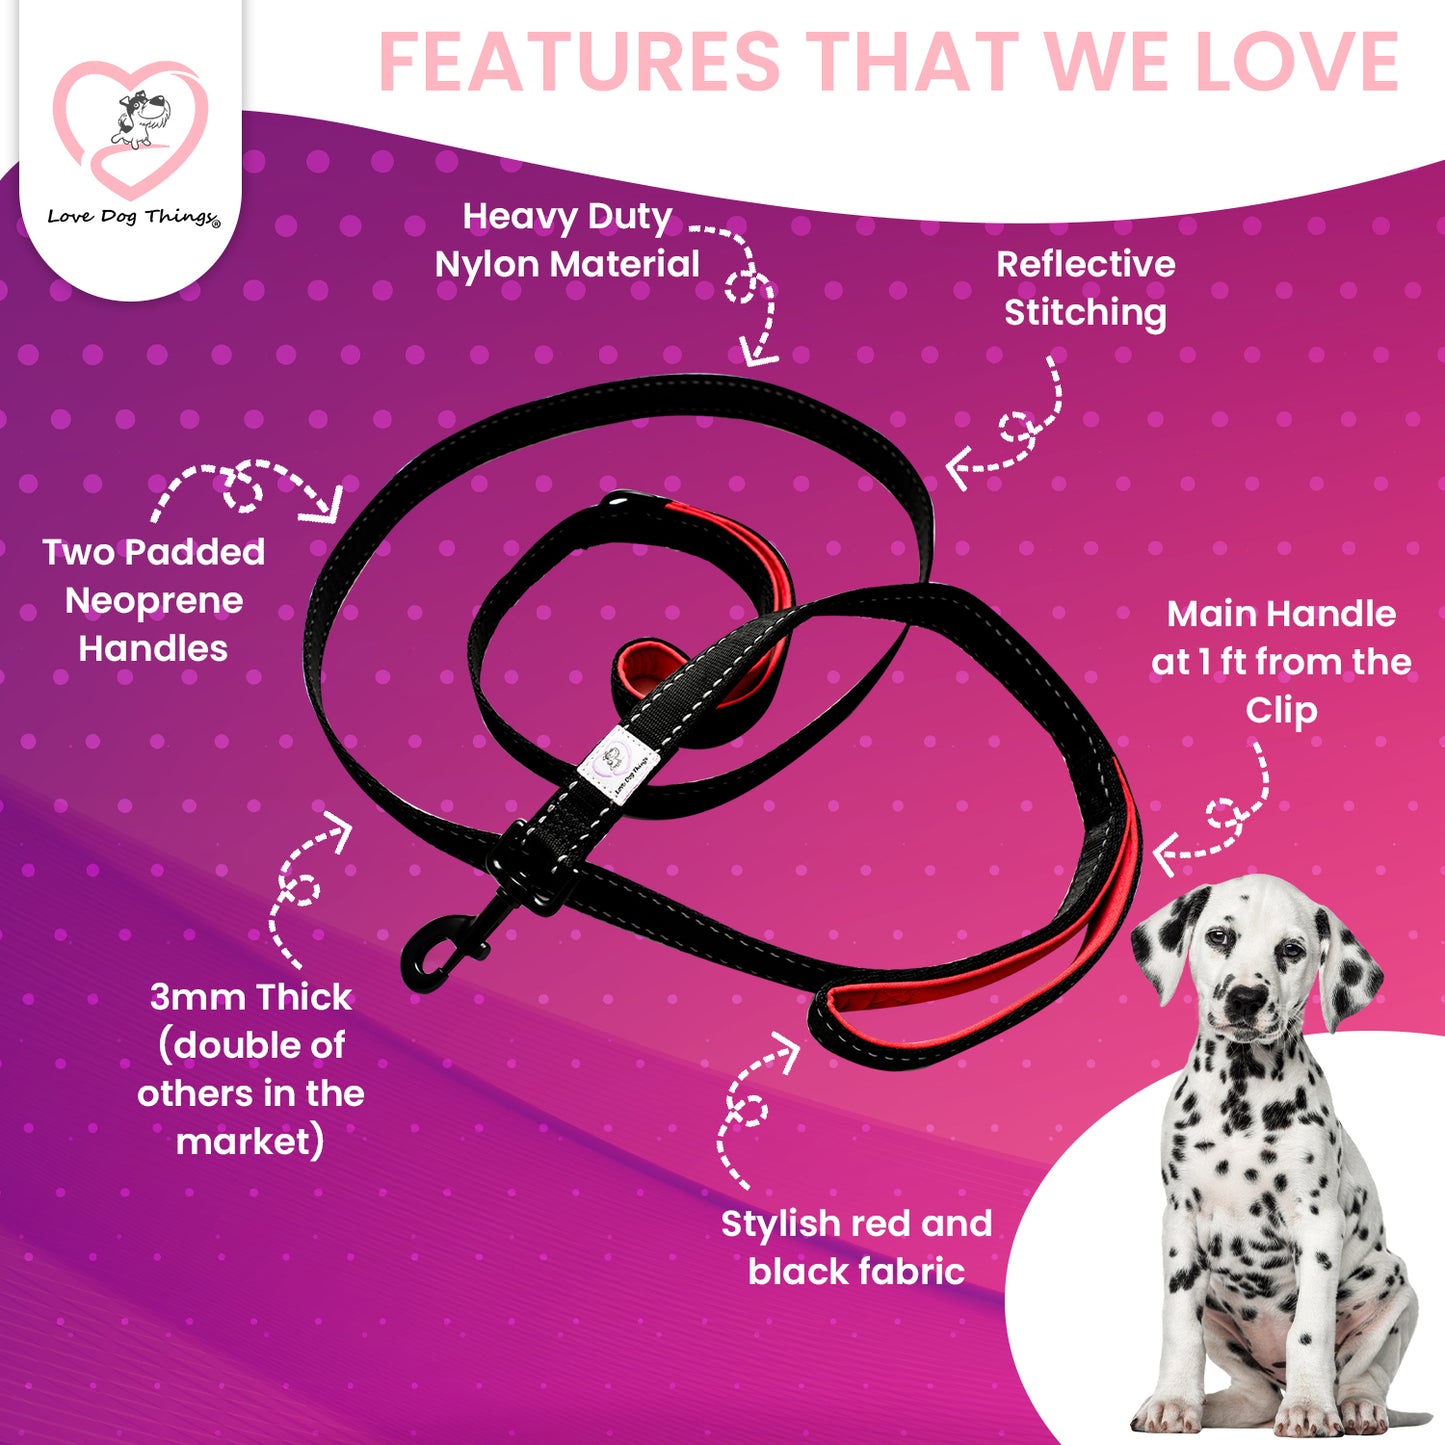 Love Dog Things HandleX2, Dual Handle Leash- 6 Feet Premium Quality Reflective Leash